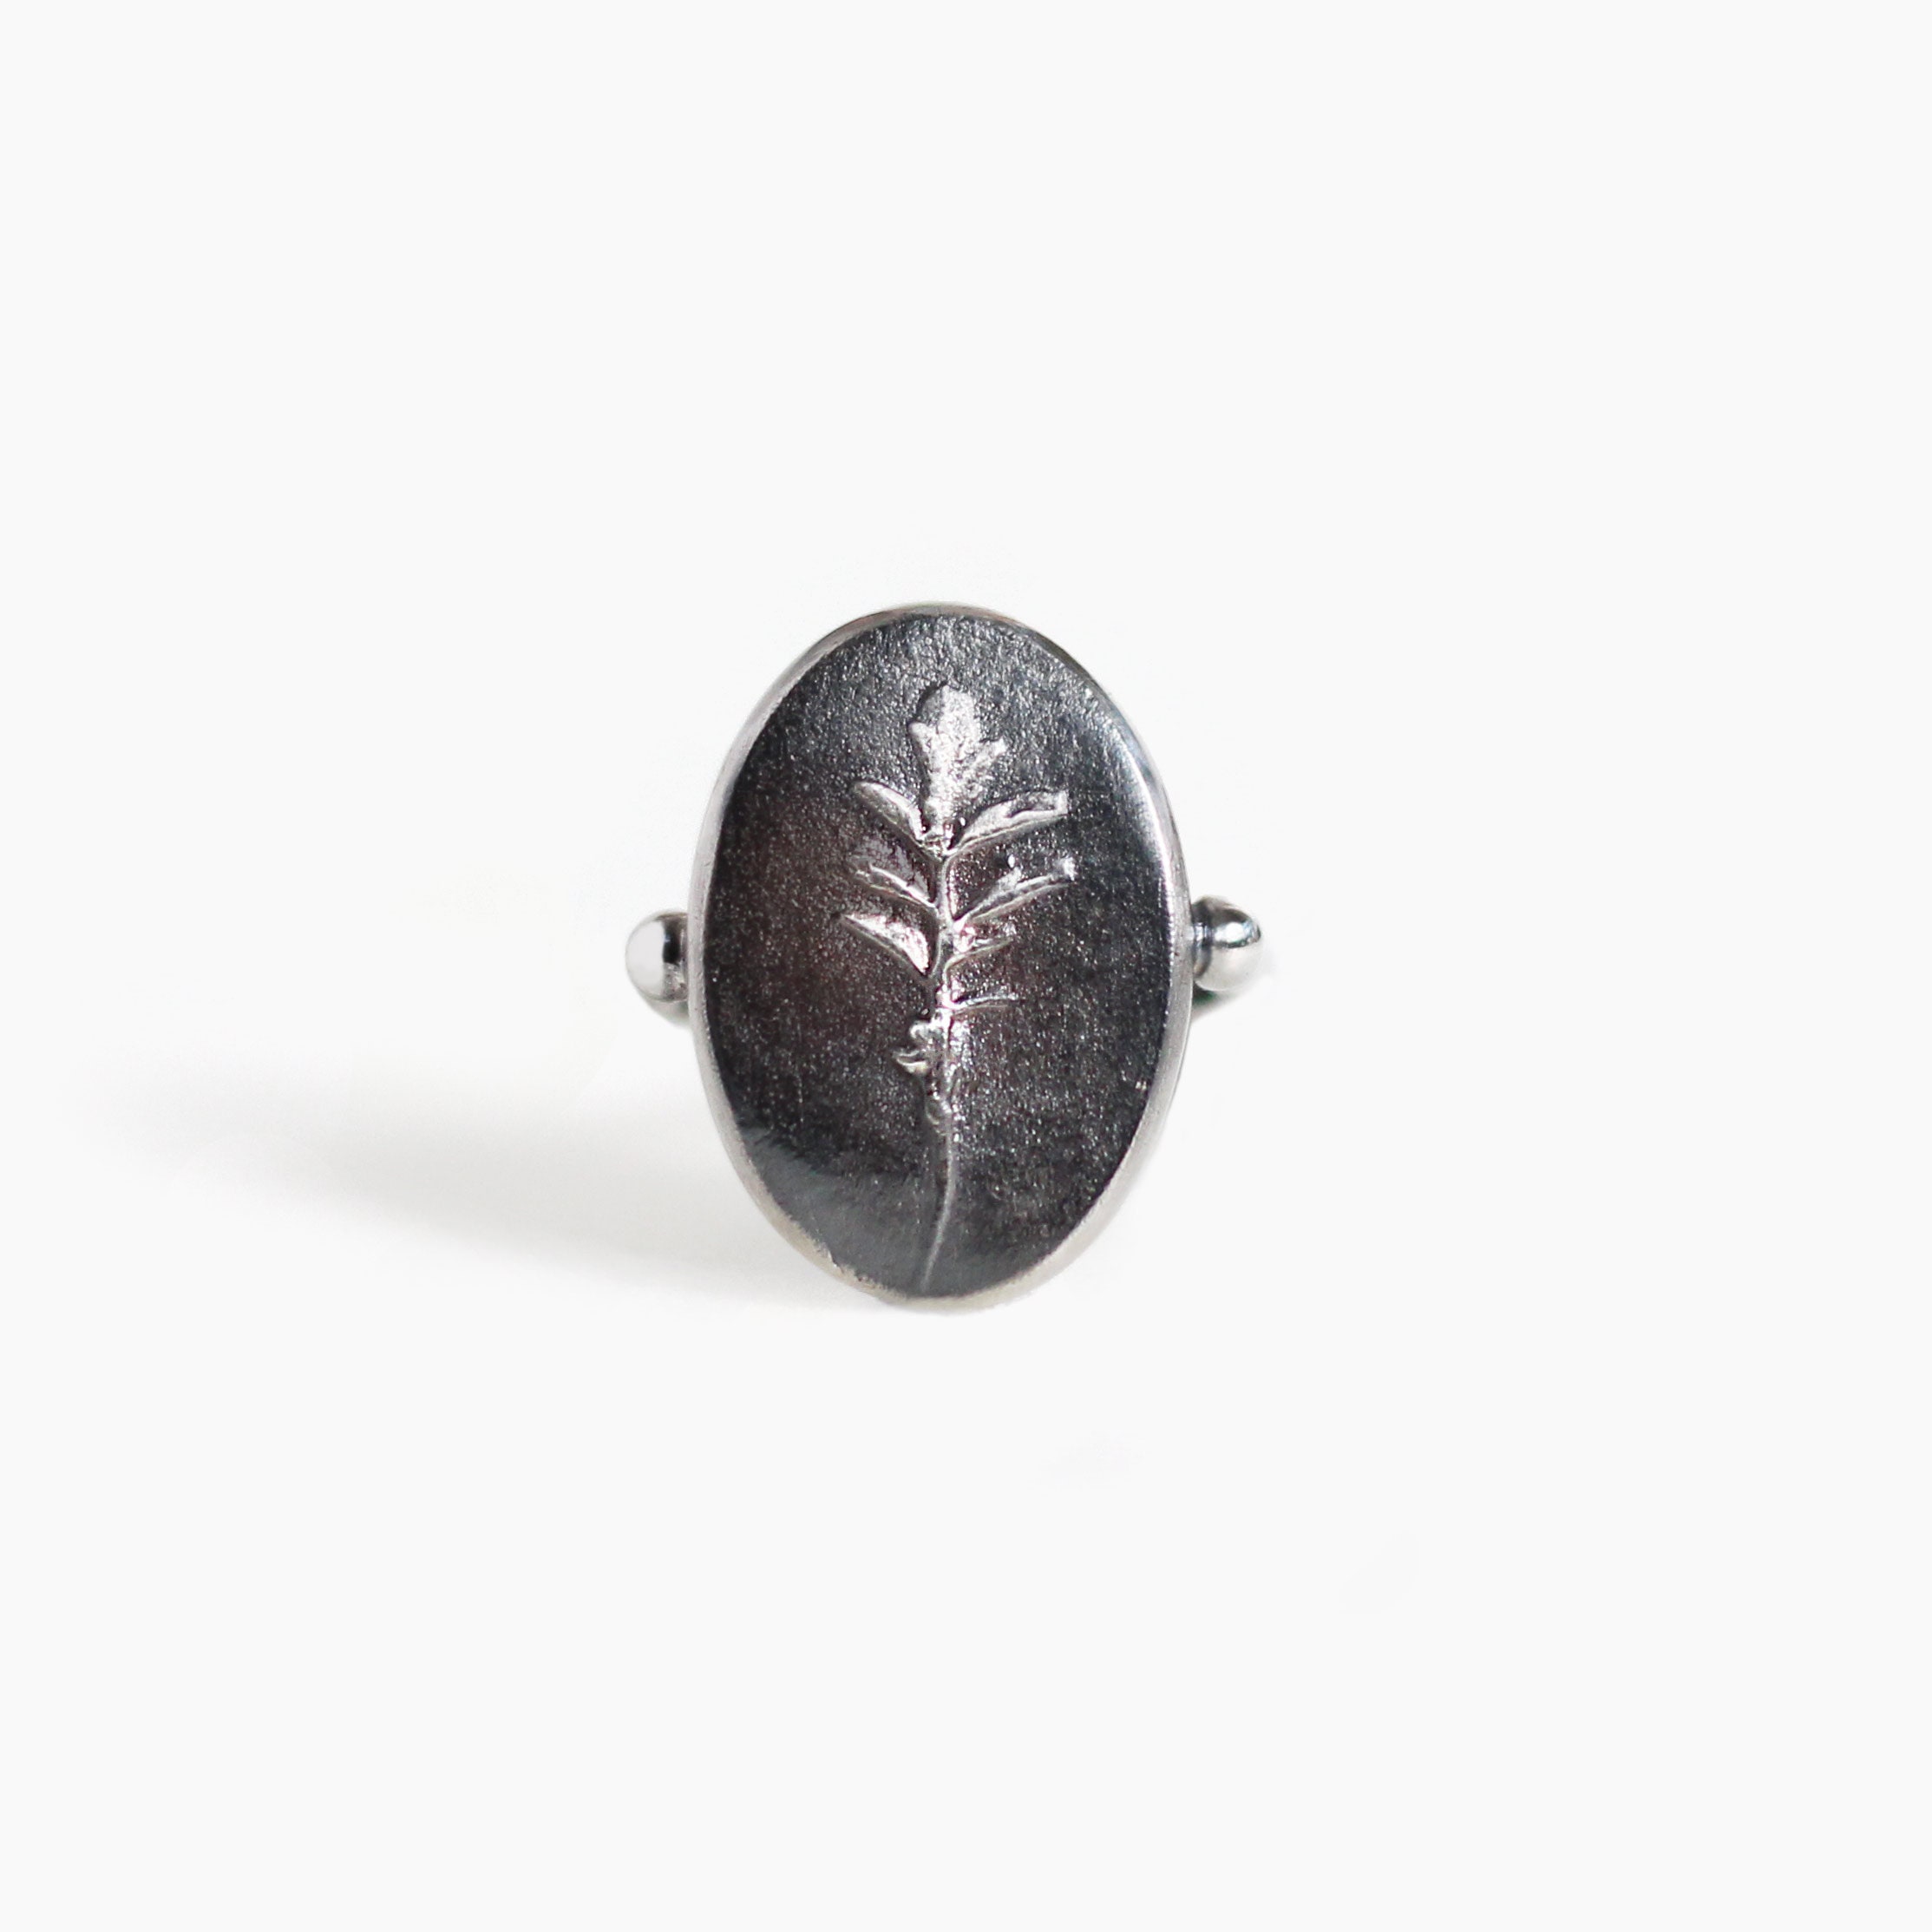 Fossil Leaf ringHandmade sterling silver ringBirthday | Etsy